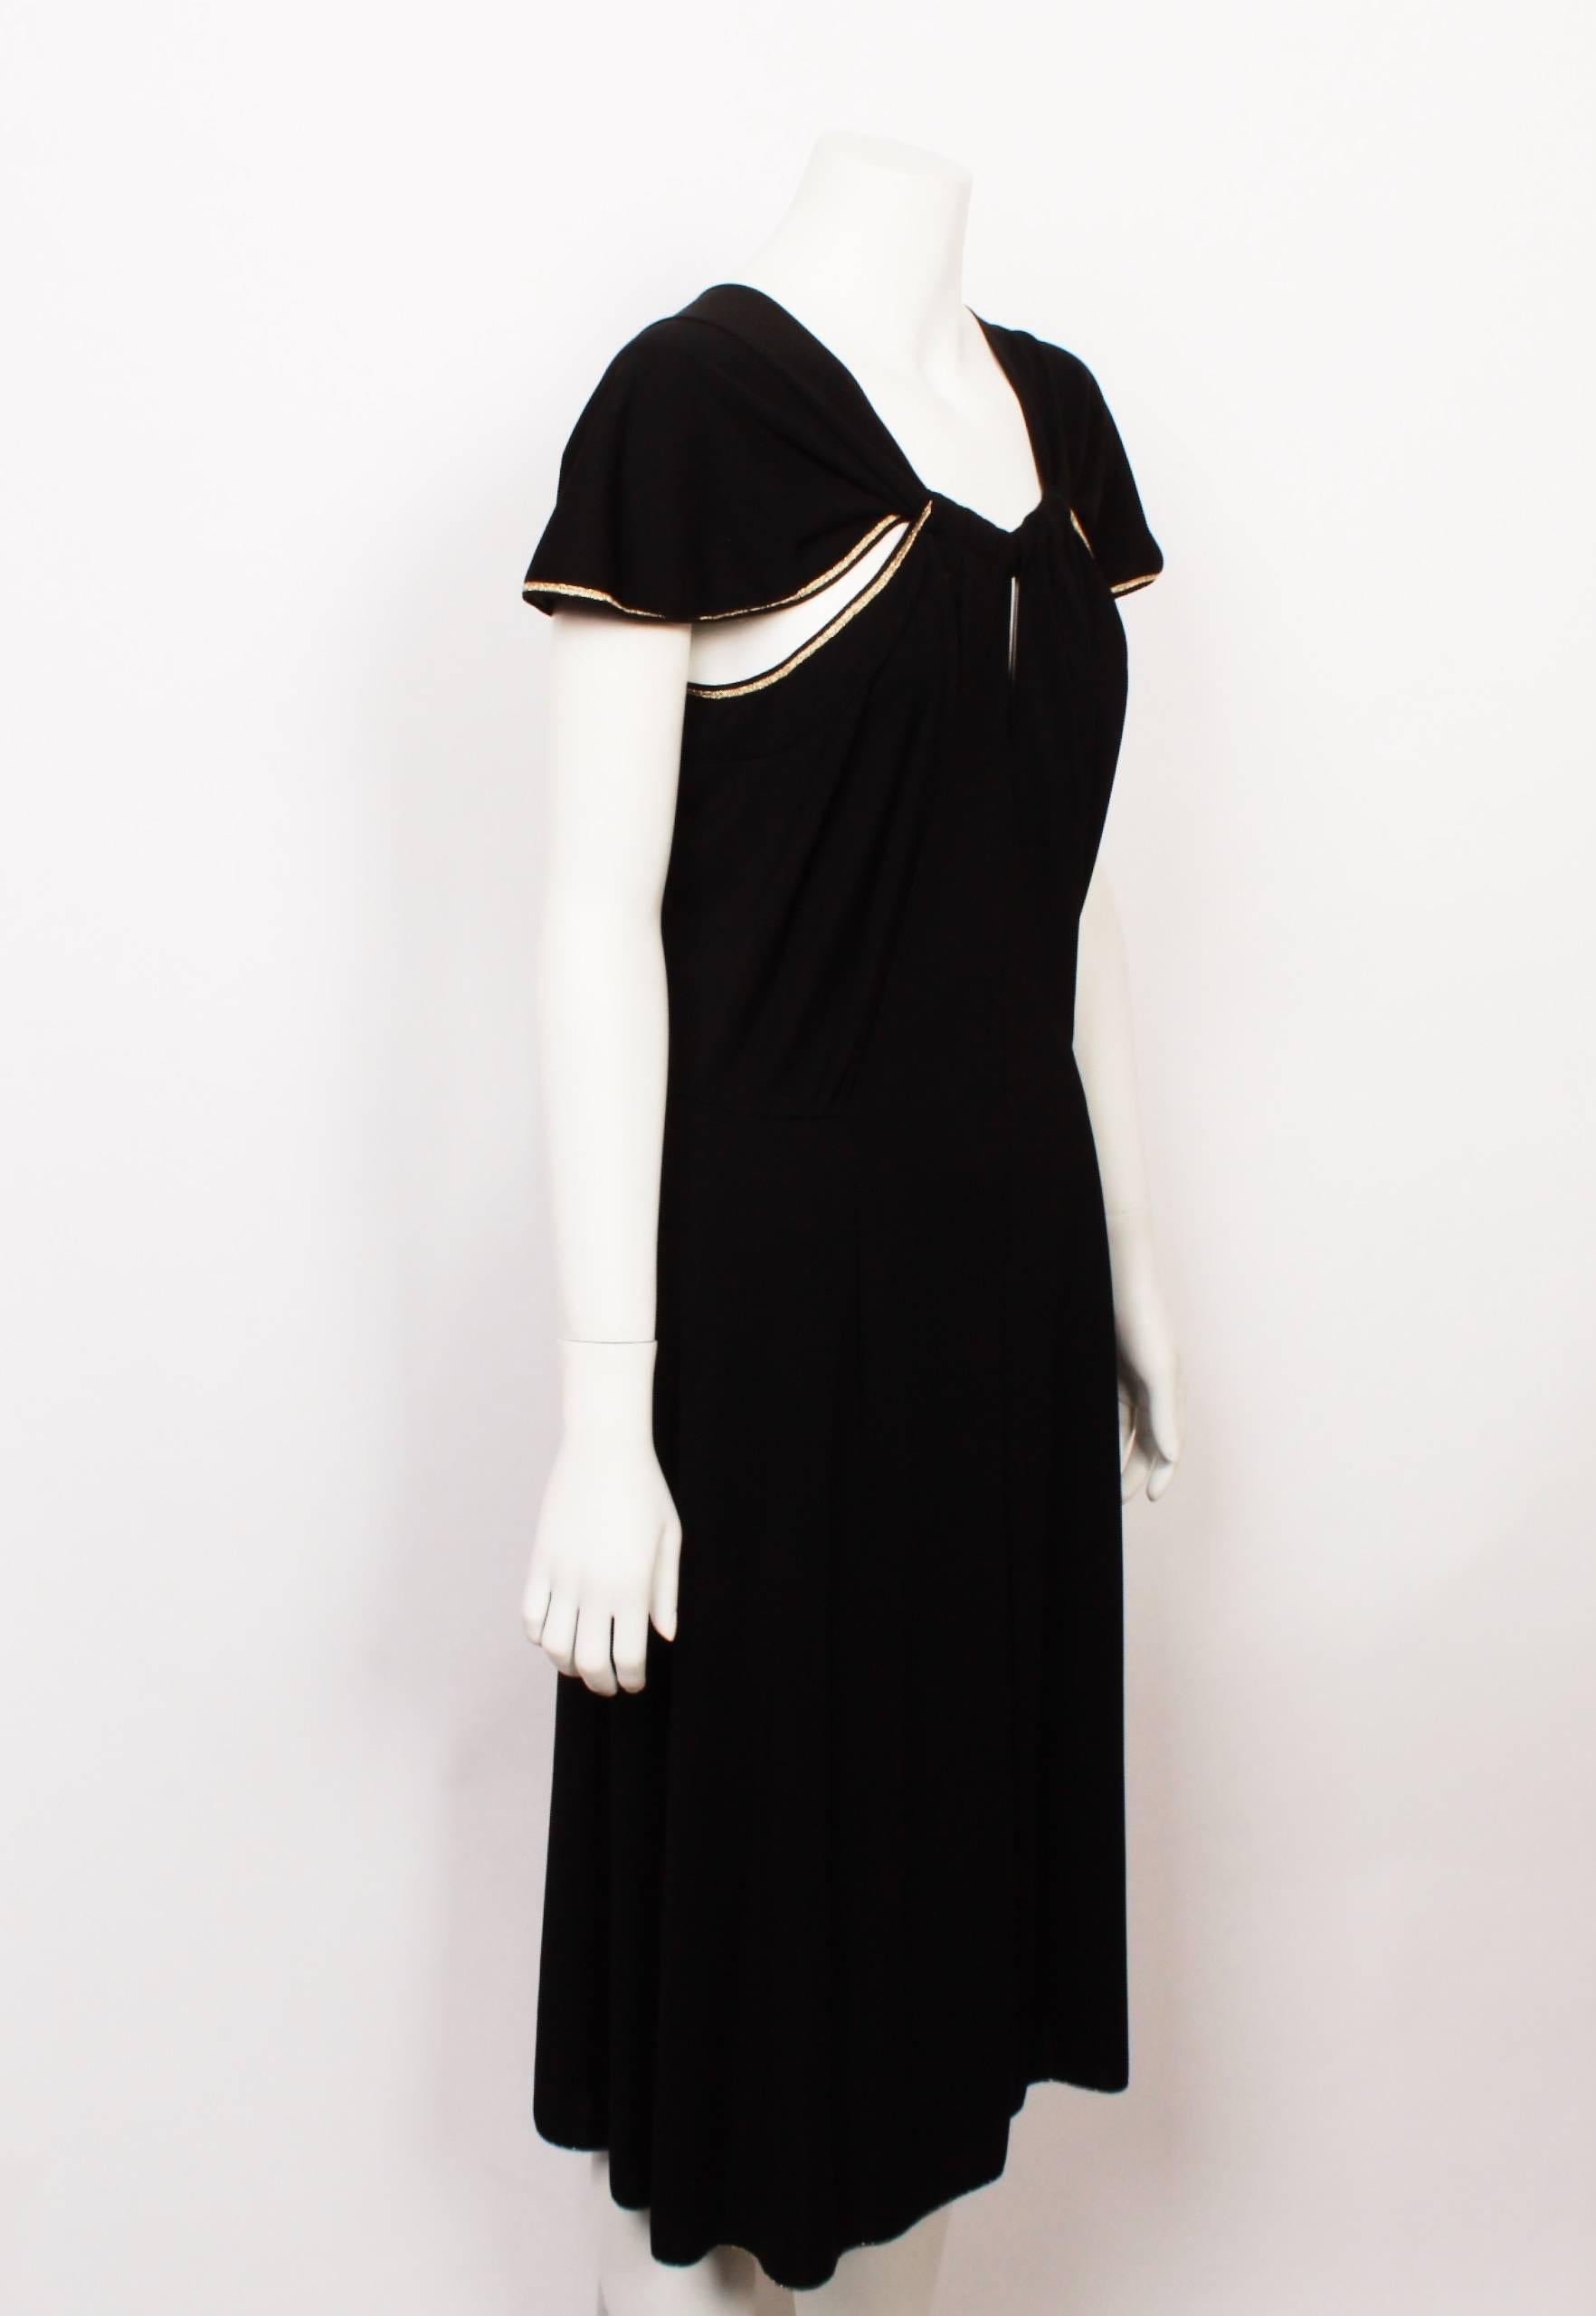 Women's Yves Saint Laurent Black Knit Dress With Golden Trim - Spring/Summer 2011